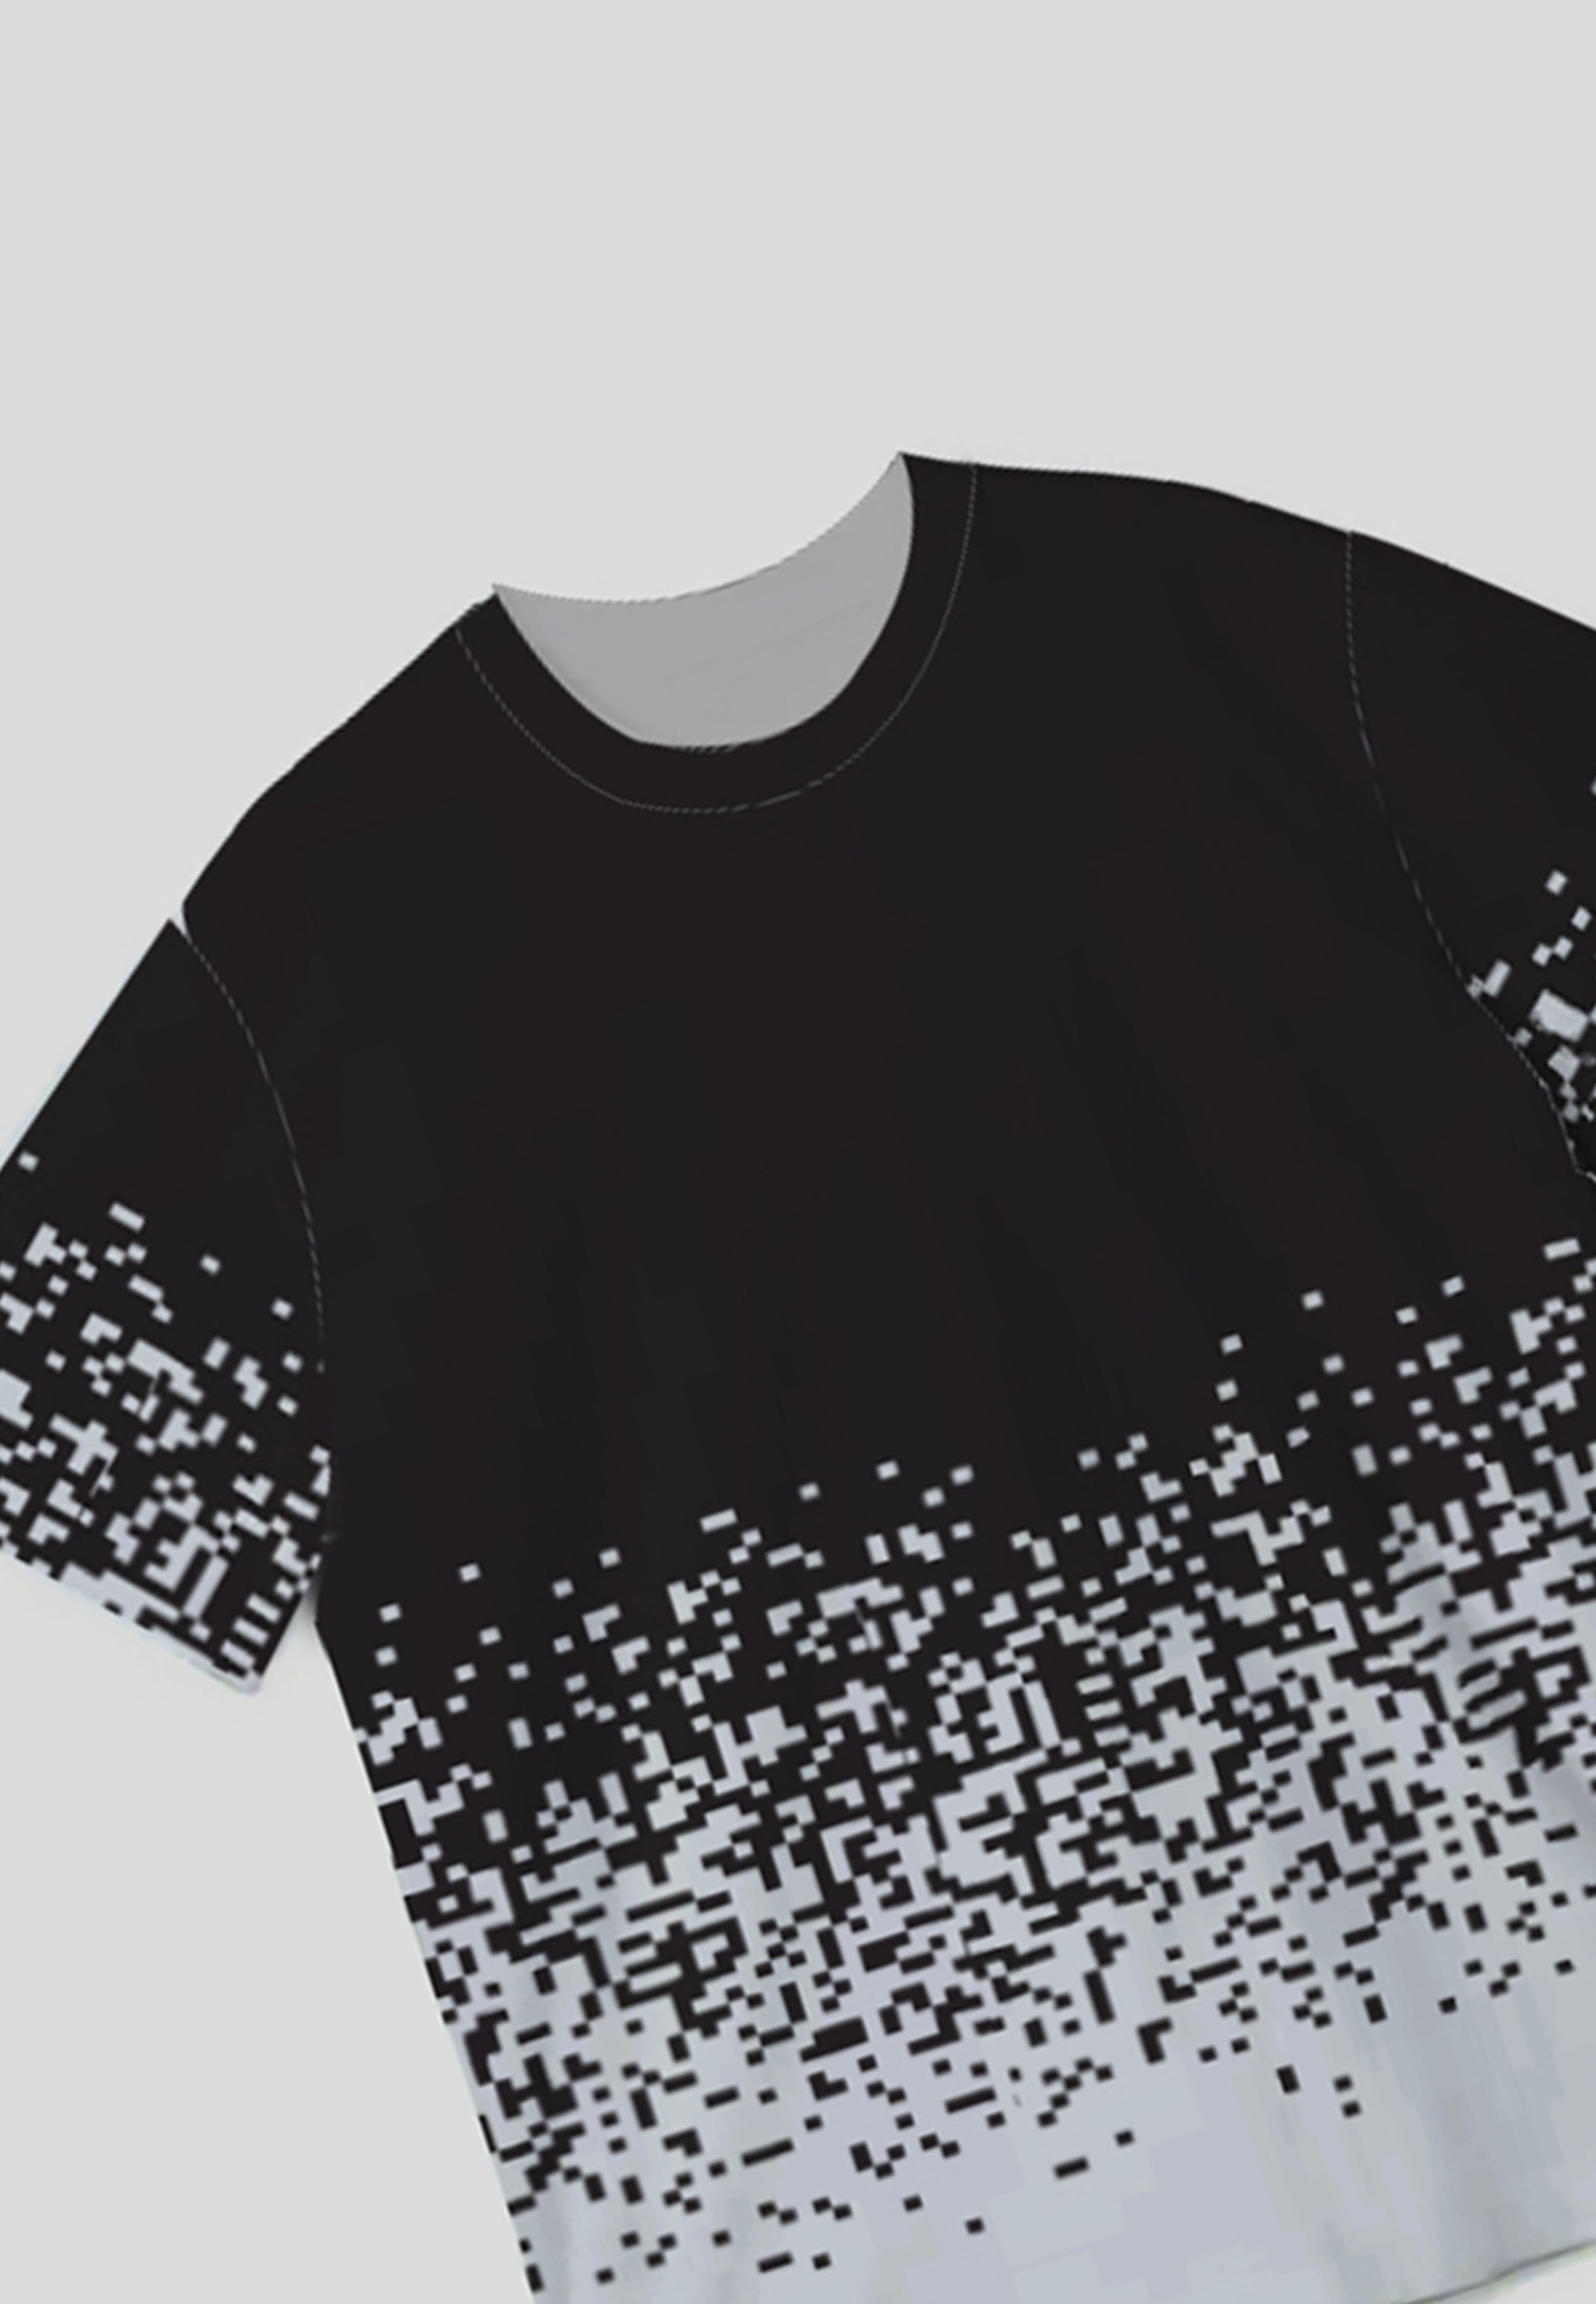 NX013 kaos oversize efek knit rajut star dust hitam putih